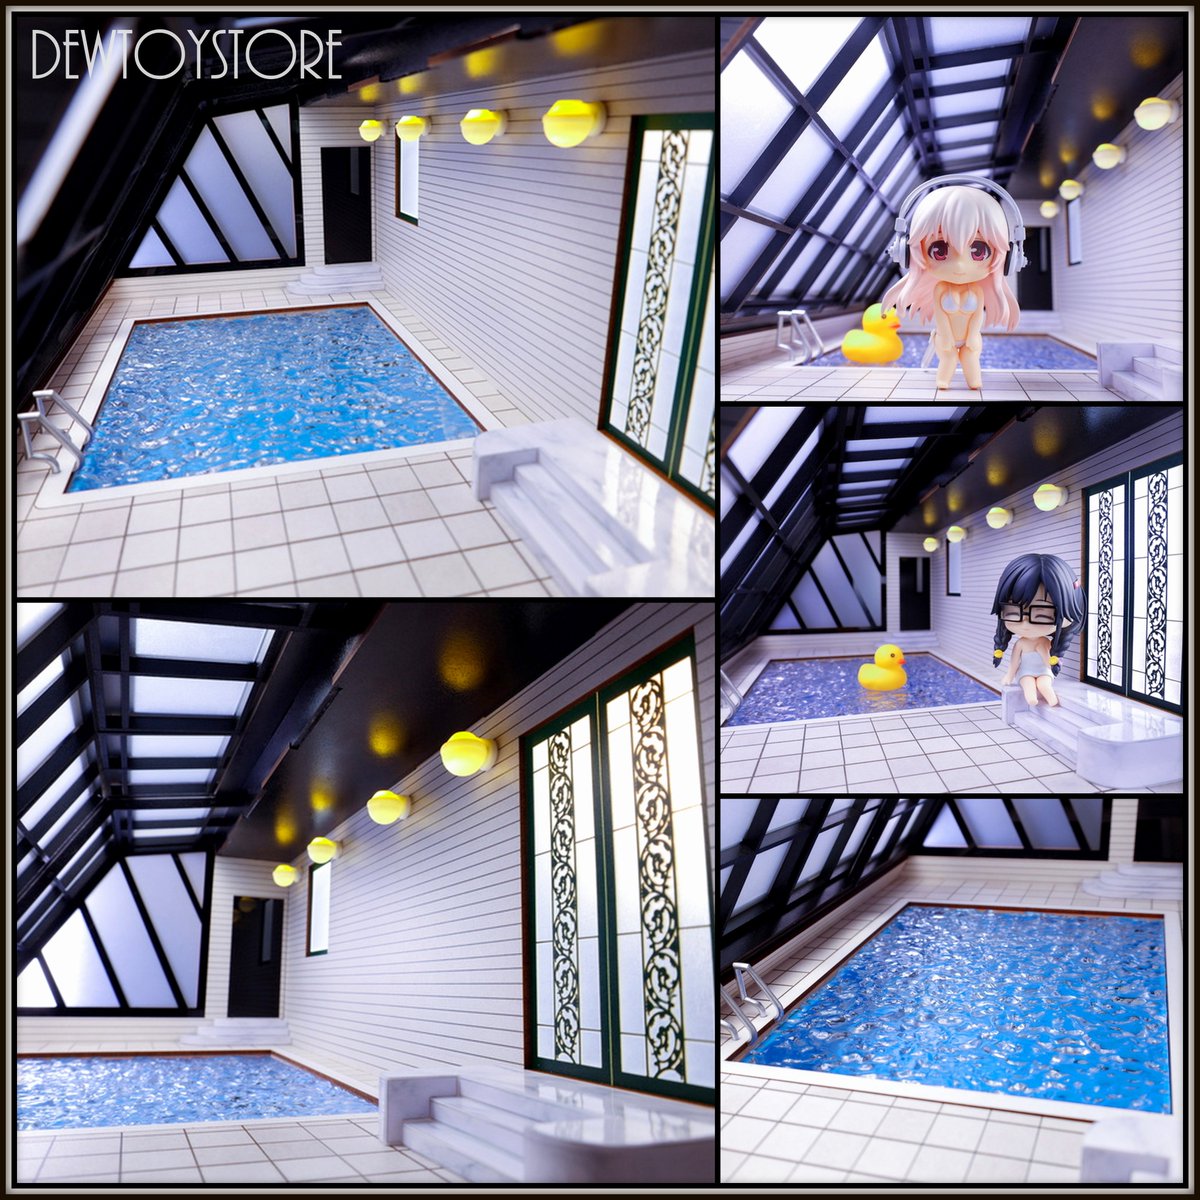 ⭐<𝙐𝙍𝙂𝙀𝙉𝙏> [𝗣𝗿𝗲-𝗼𝗿𝗱𝗲𝗿] Cat Egg Action Figure Diorama Display - Tokyo Hot Swimming Pool (Mini Ver.) ⭐️
ohmyprimus.com/cegtkhtspm.html

#ohmyprimus #dewtoystore #actionfigurecollection #actionfigures #nendoroid #nendoroiddoll #gsc #toydiorama #categg #swimmingpool #tokyo